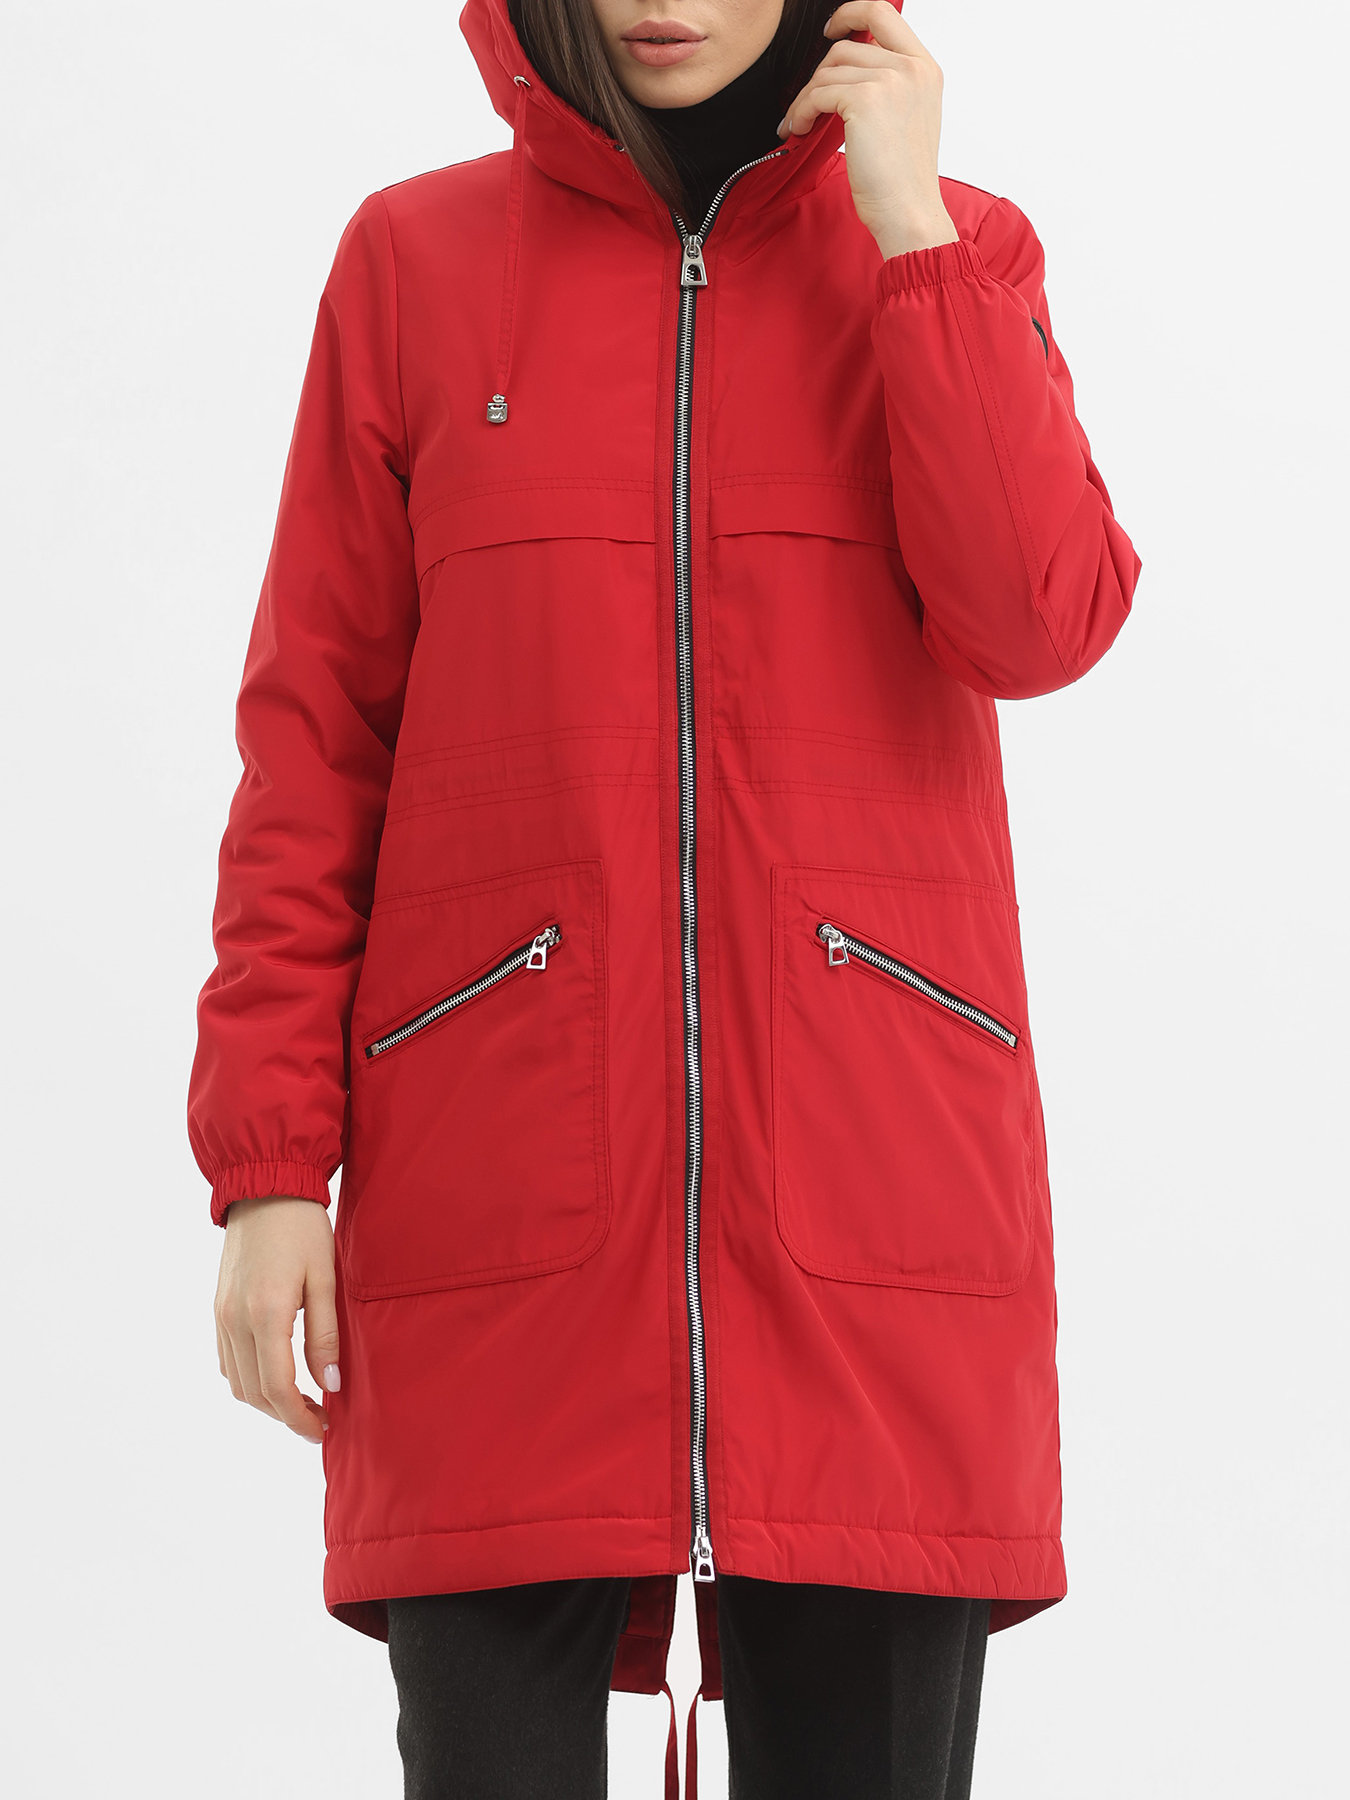 Пальто AVI 418331-020, цвет красный, размер 44 - фото 1